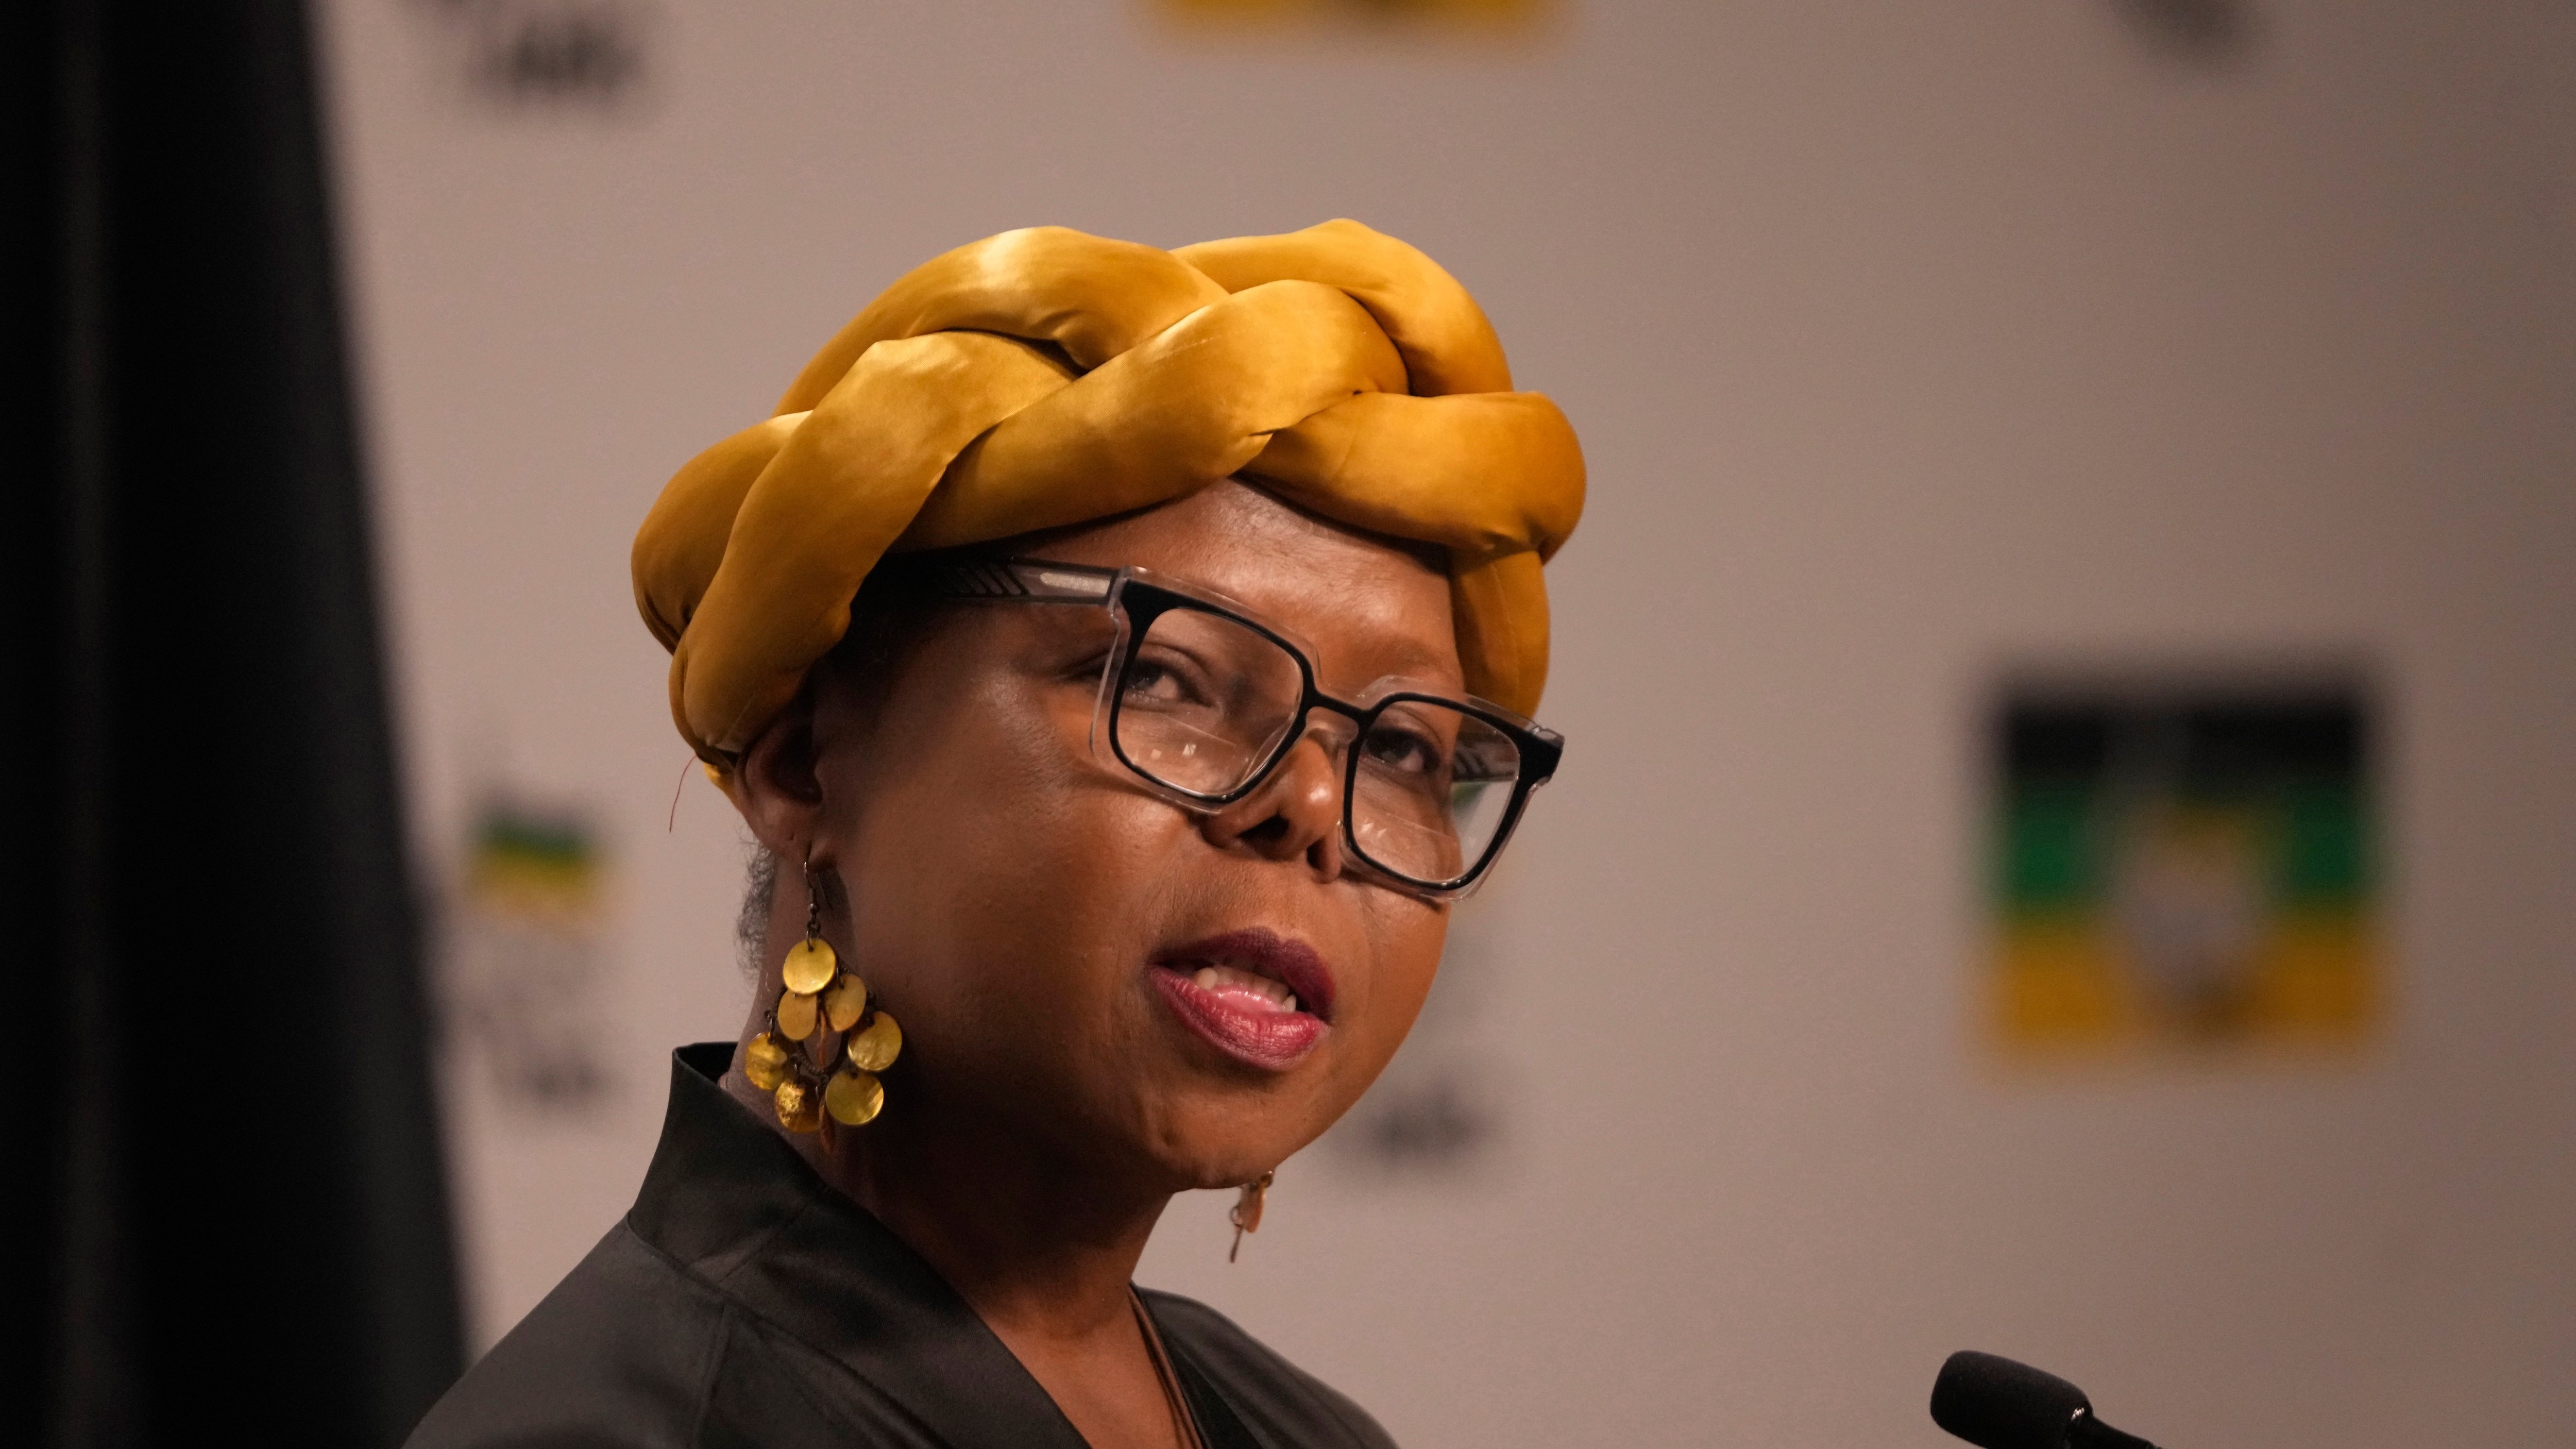 The ANC spokeswoman Mahlengi Bhengu-Motsiri said that market confidence would be considered before any coalition deal